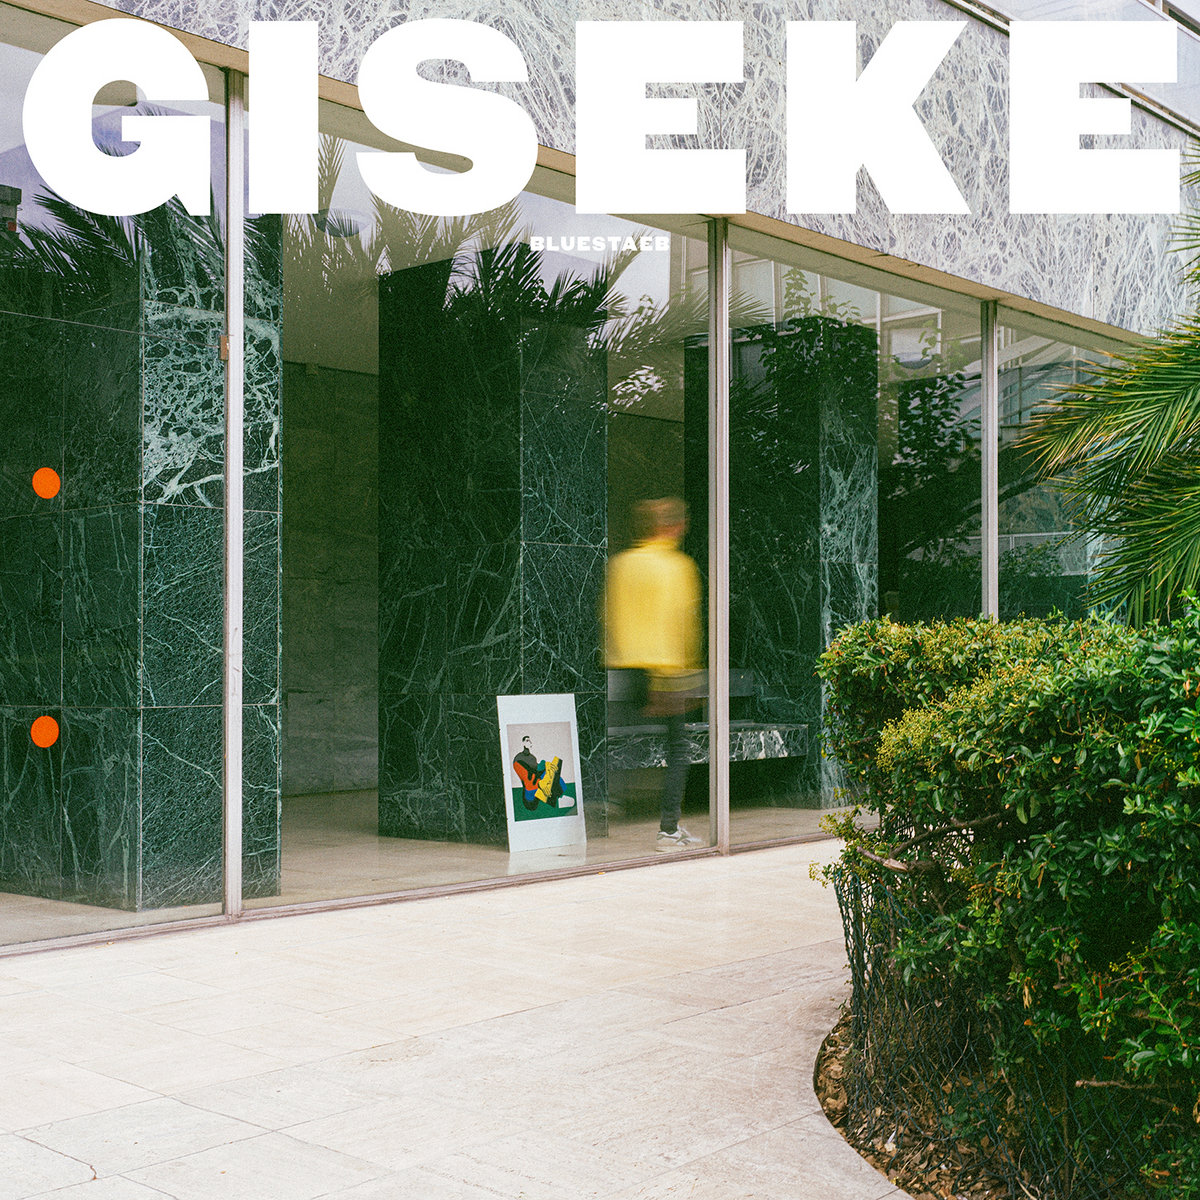 Bluestaeb releases new album "GISEKE"